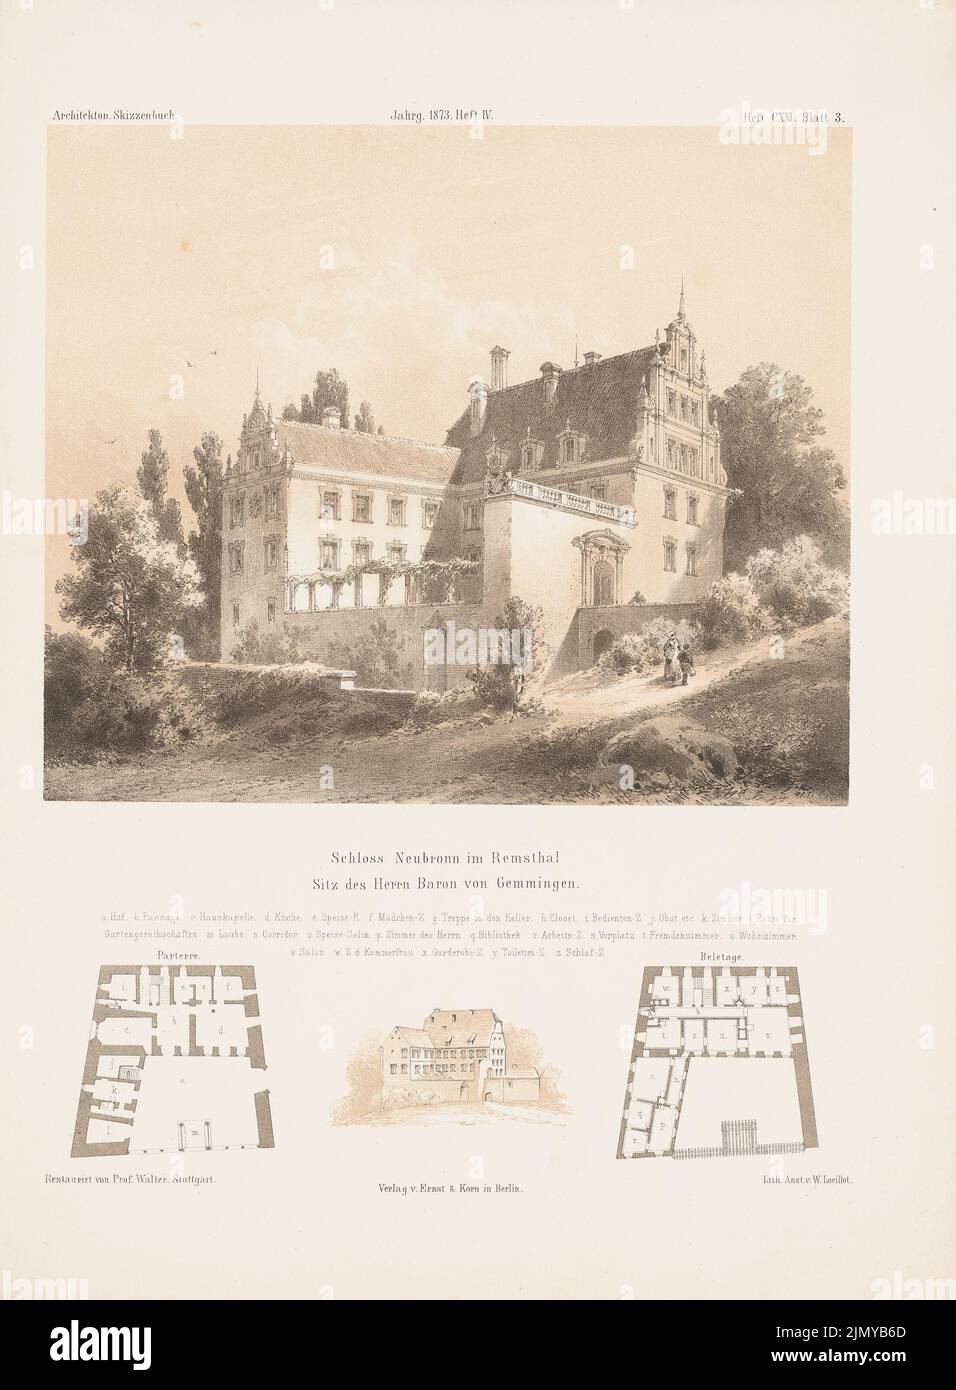 N.N., Neubonn Castle, Remstal. (From: Architectural sketchbook, H. 121/4, 1873.) (1873-1873): Grundrisse, views. Stitch on paper, 34.1 x 25.1 cm (including scan edges) Stock Photo